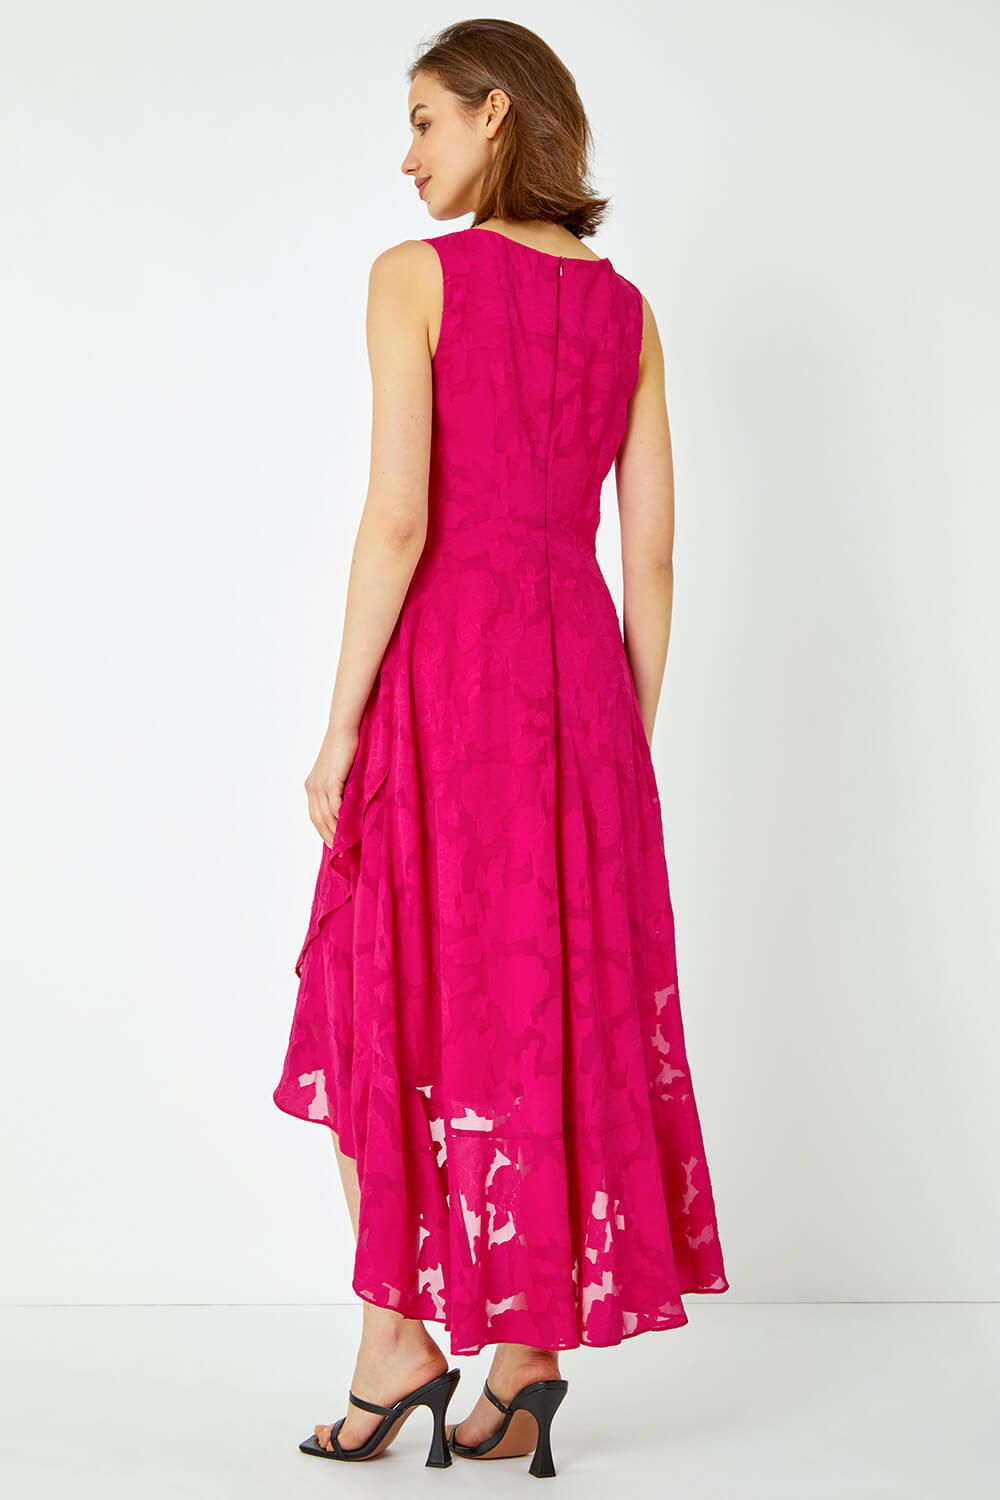 CERISE Sleeveless Jacquard Dipped Hem Midi Dress, Image 3 of 5